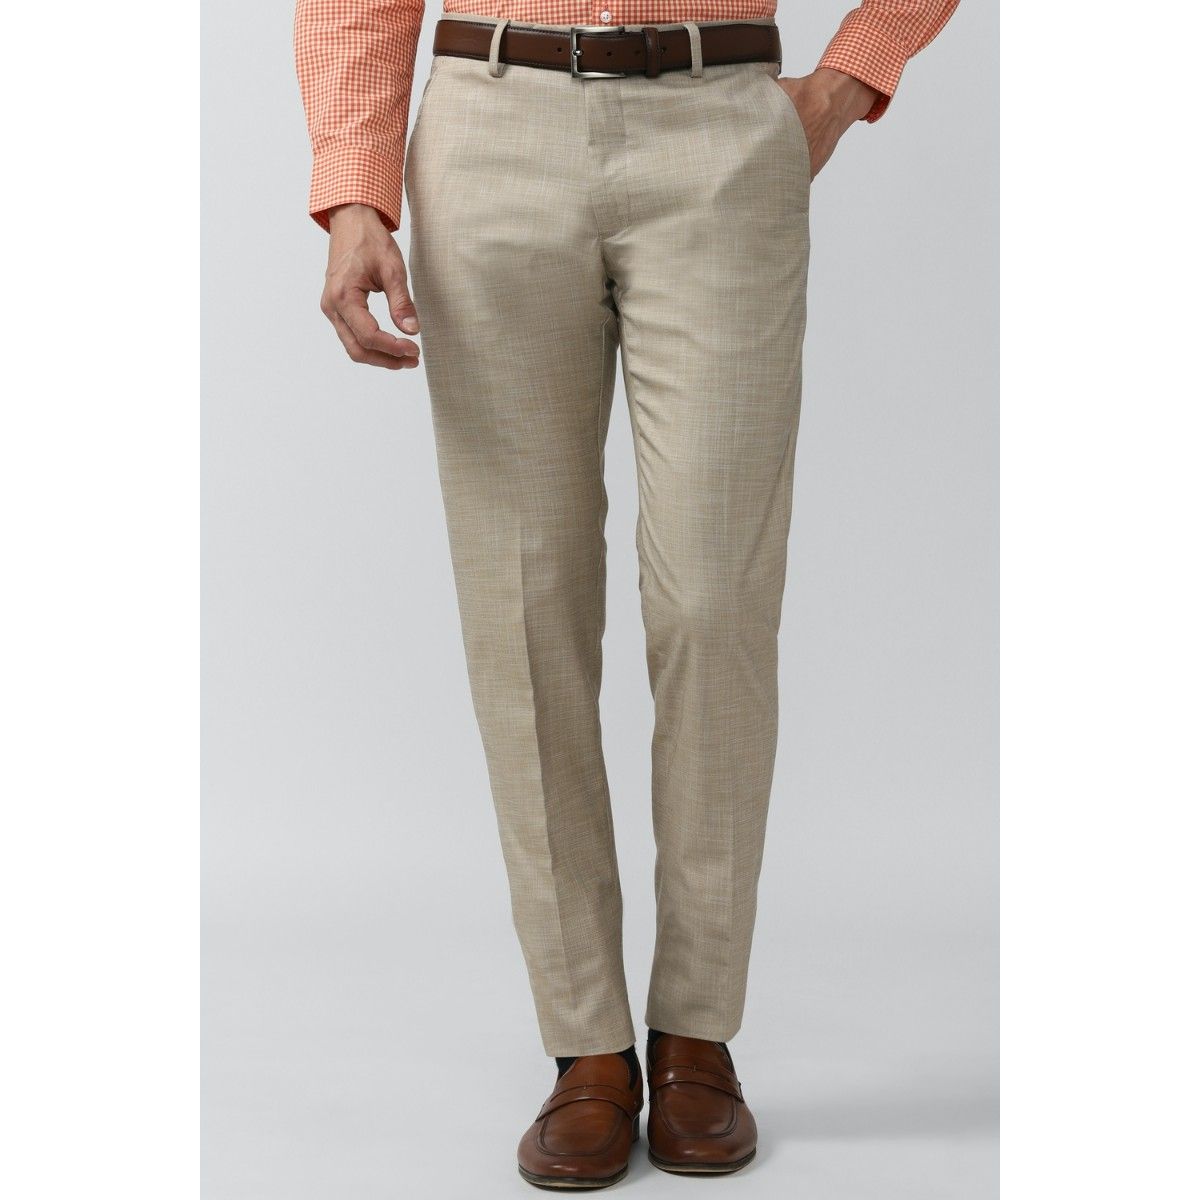 Buy Khaki Trousers & Pants for Men by PETER ENGLAND Online | Ajio.com